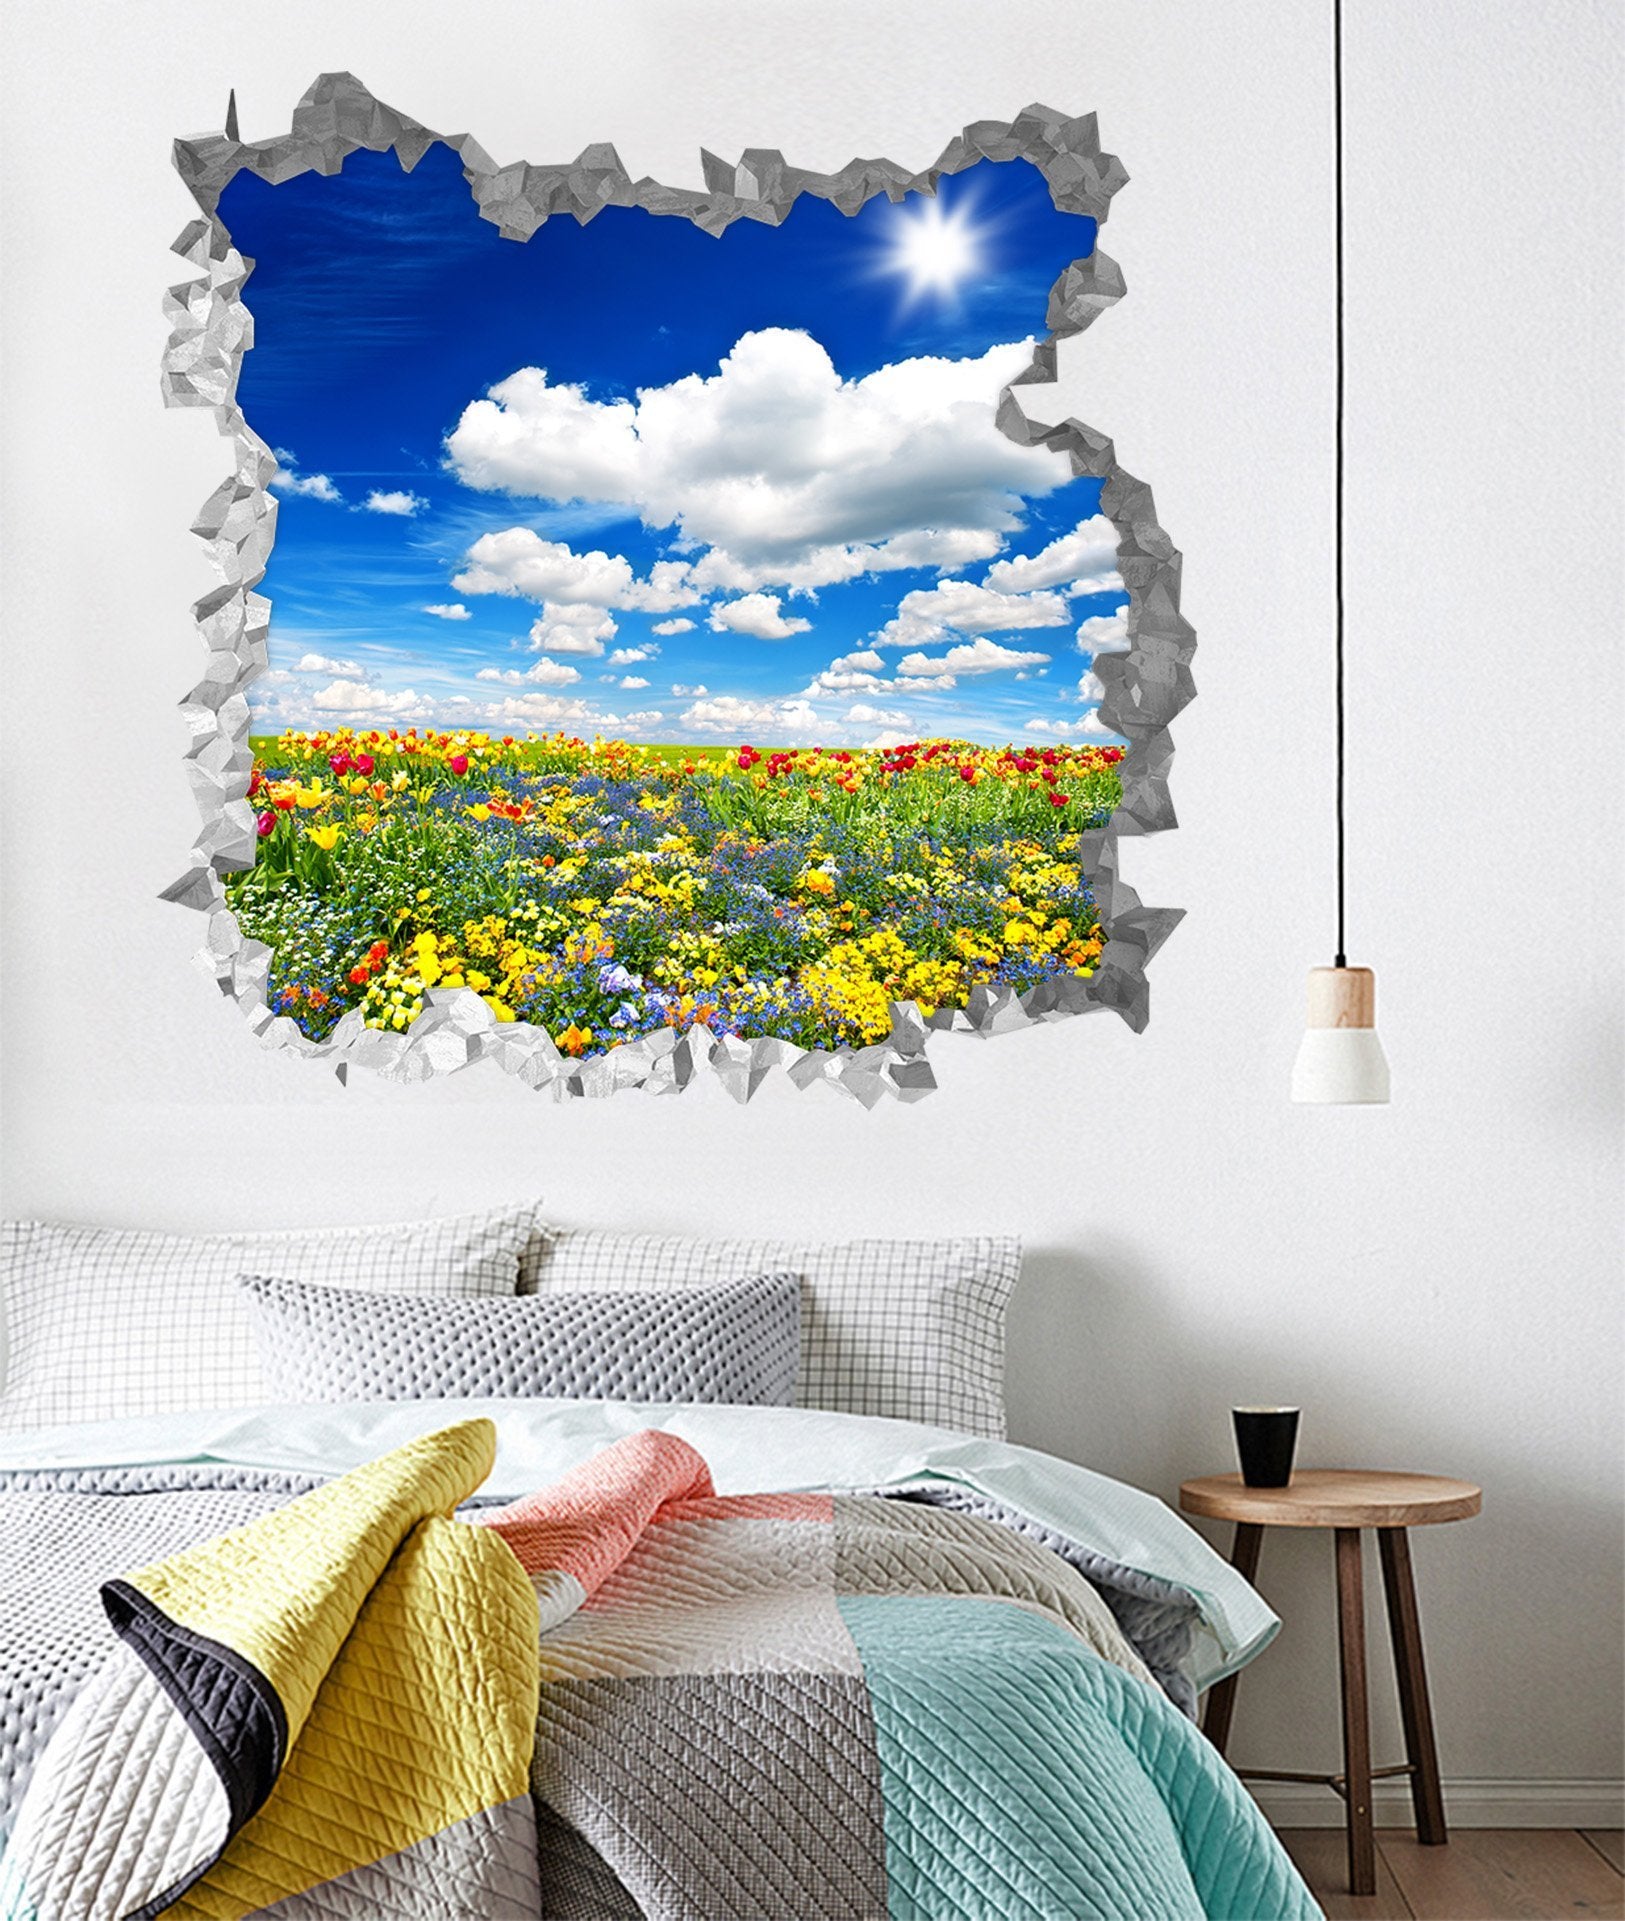 3D Flowers Field White Clouds 211 Broken Wall Murals Wallpaper AJ Wallpaper 